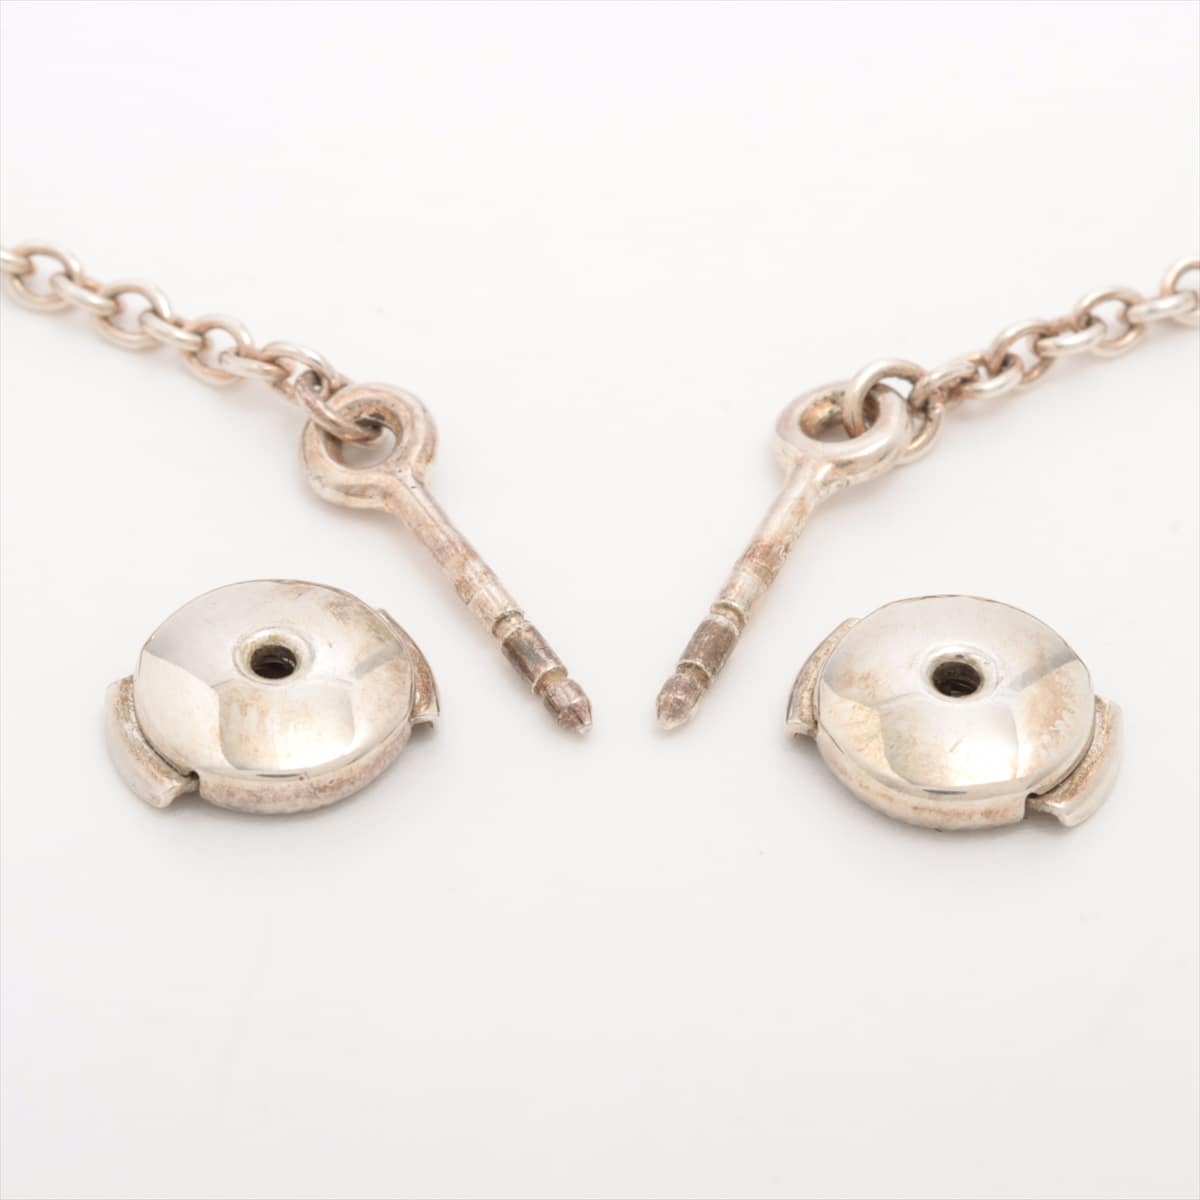 Hermès Chaîne d'Ancre Piercing jewelry (for both ears) 925 6.7g Silver